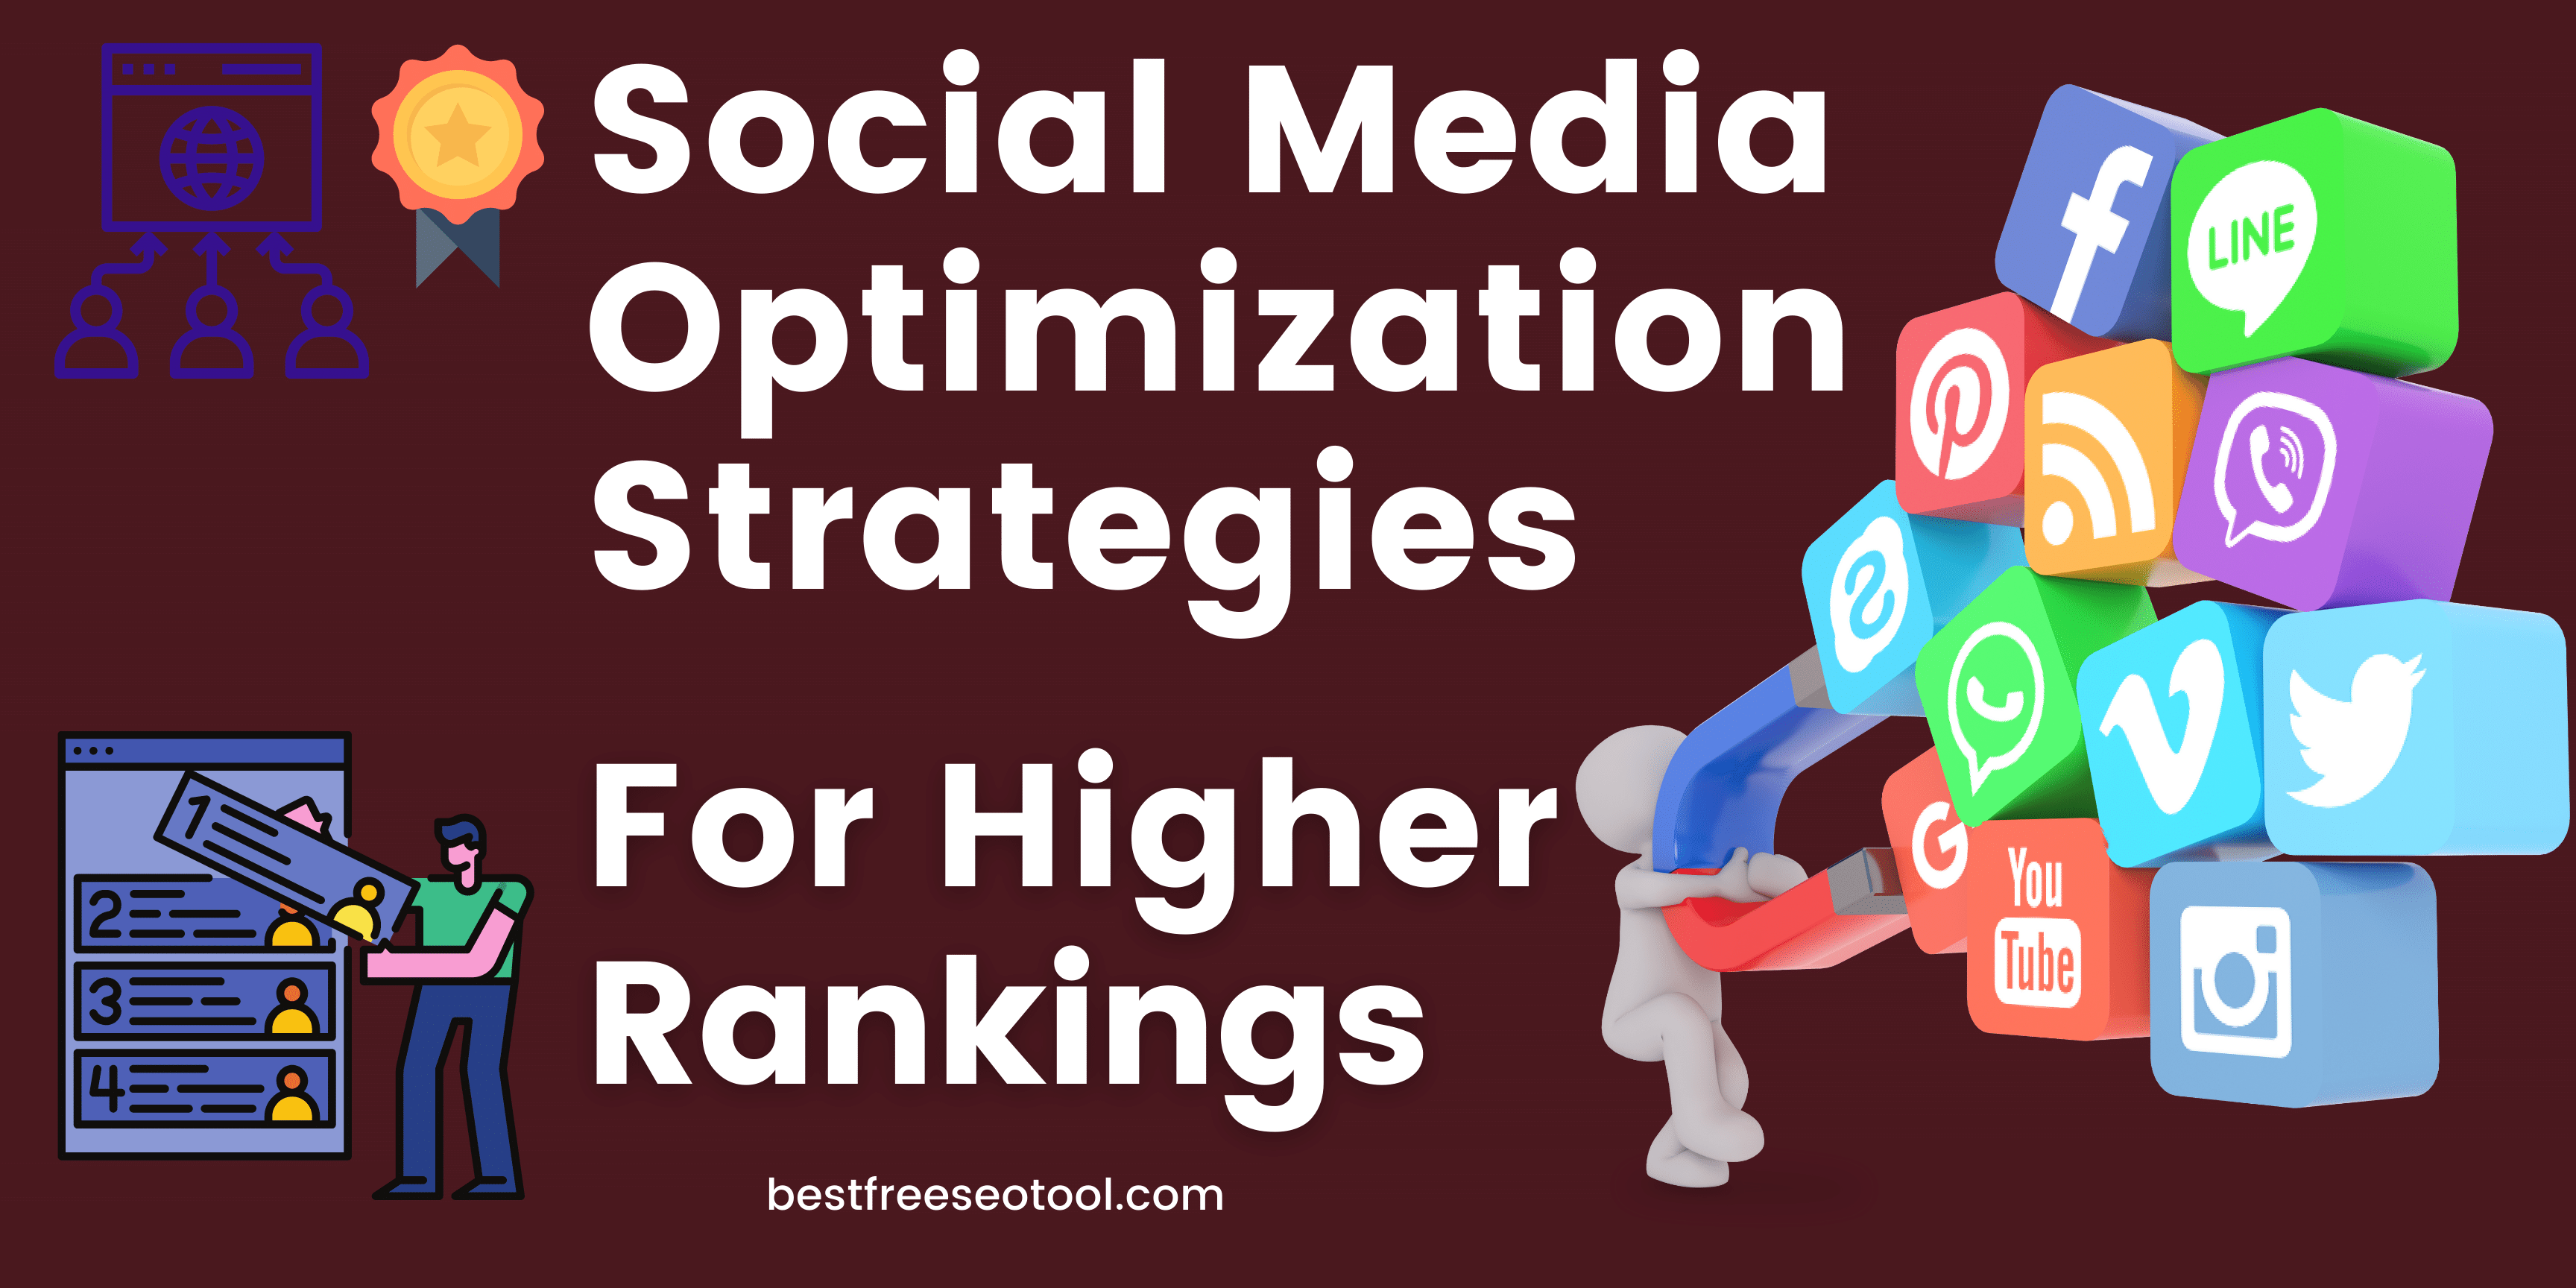 6 Major Social Media Optimization Strategies For Higher Rankings Best Free Seo Tool 5054